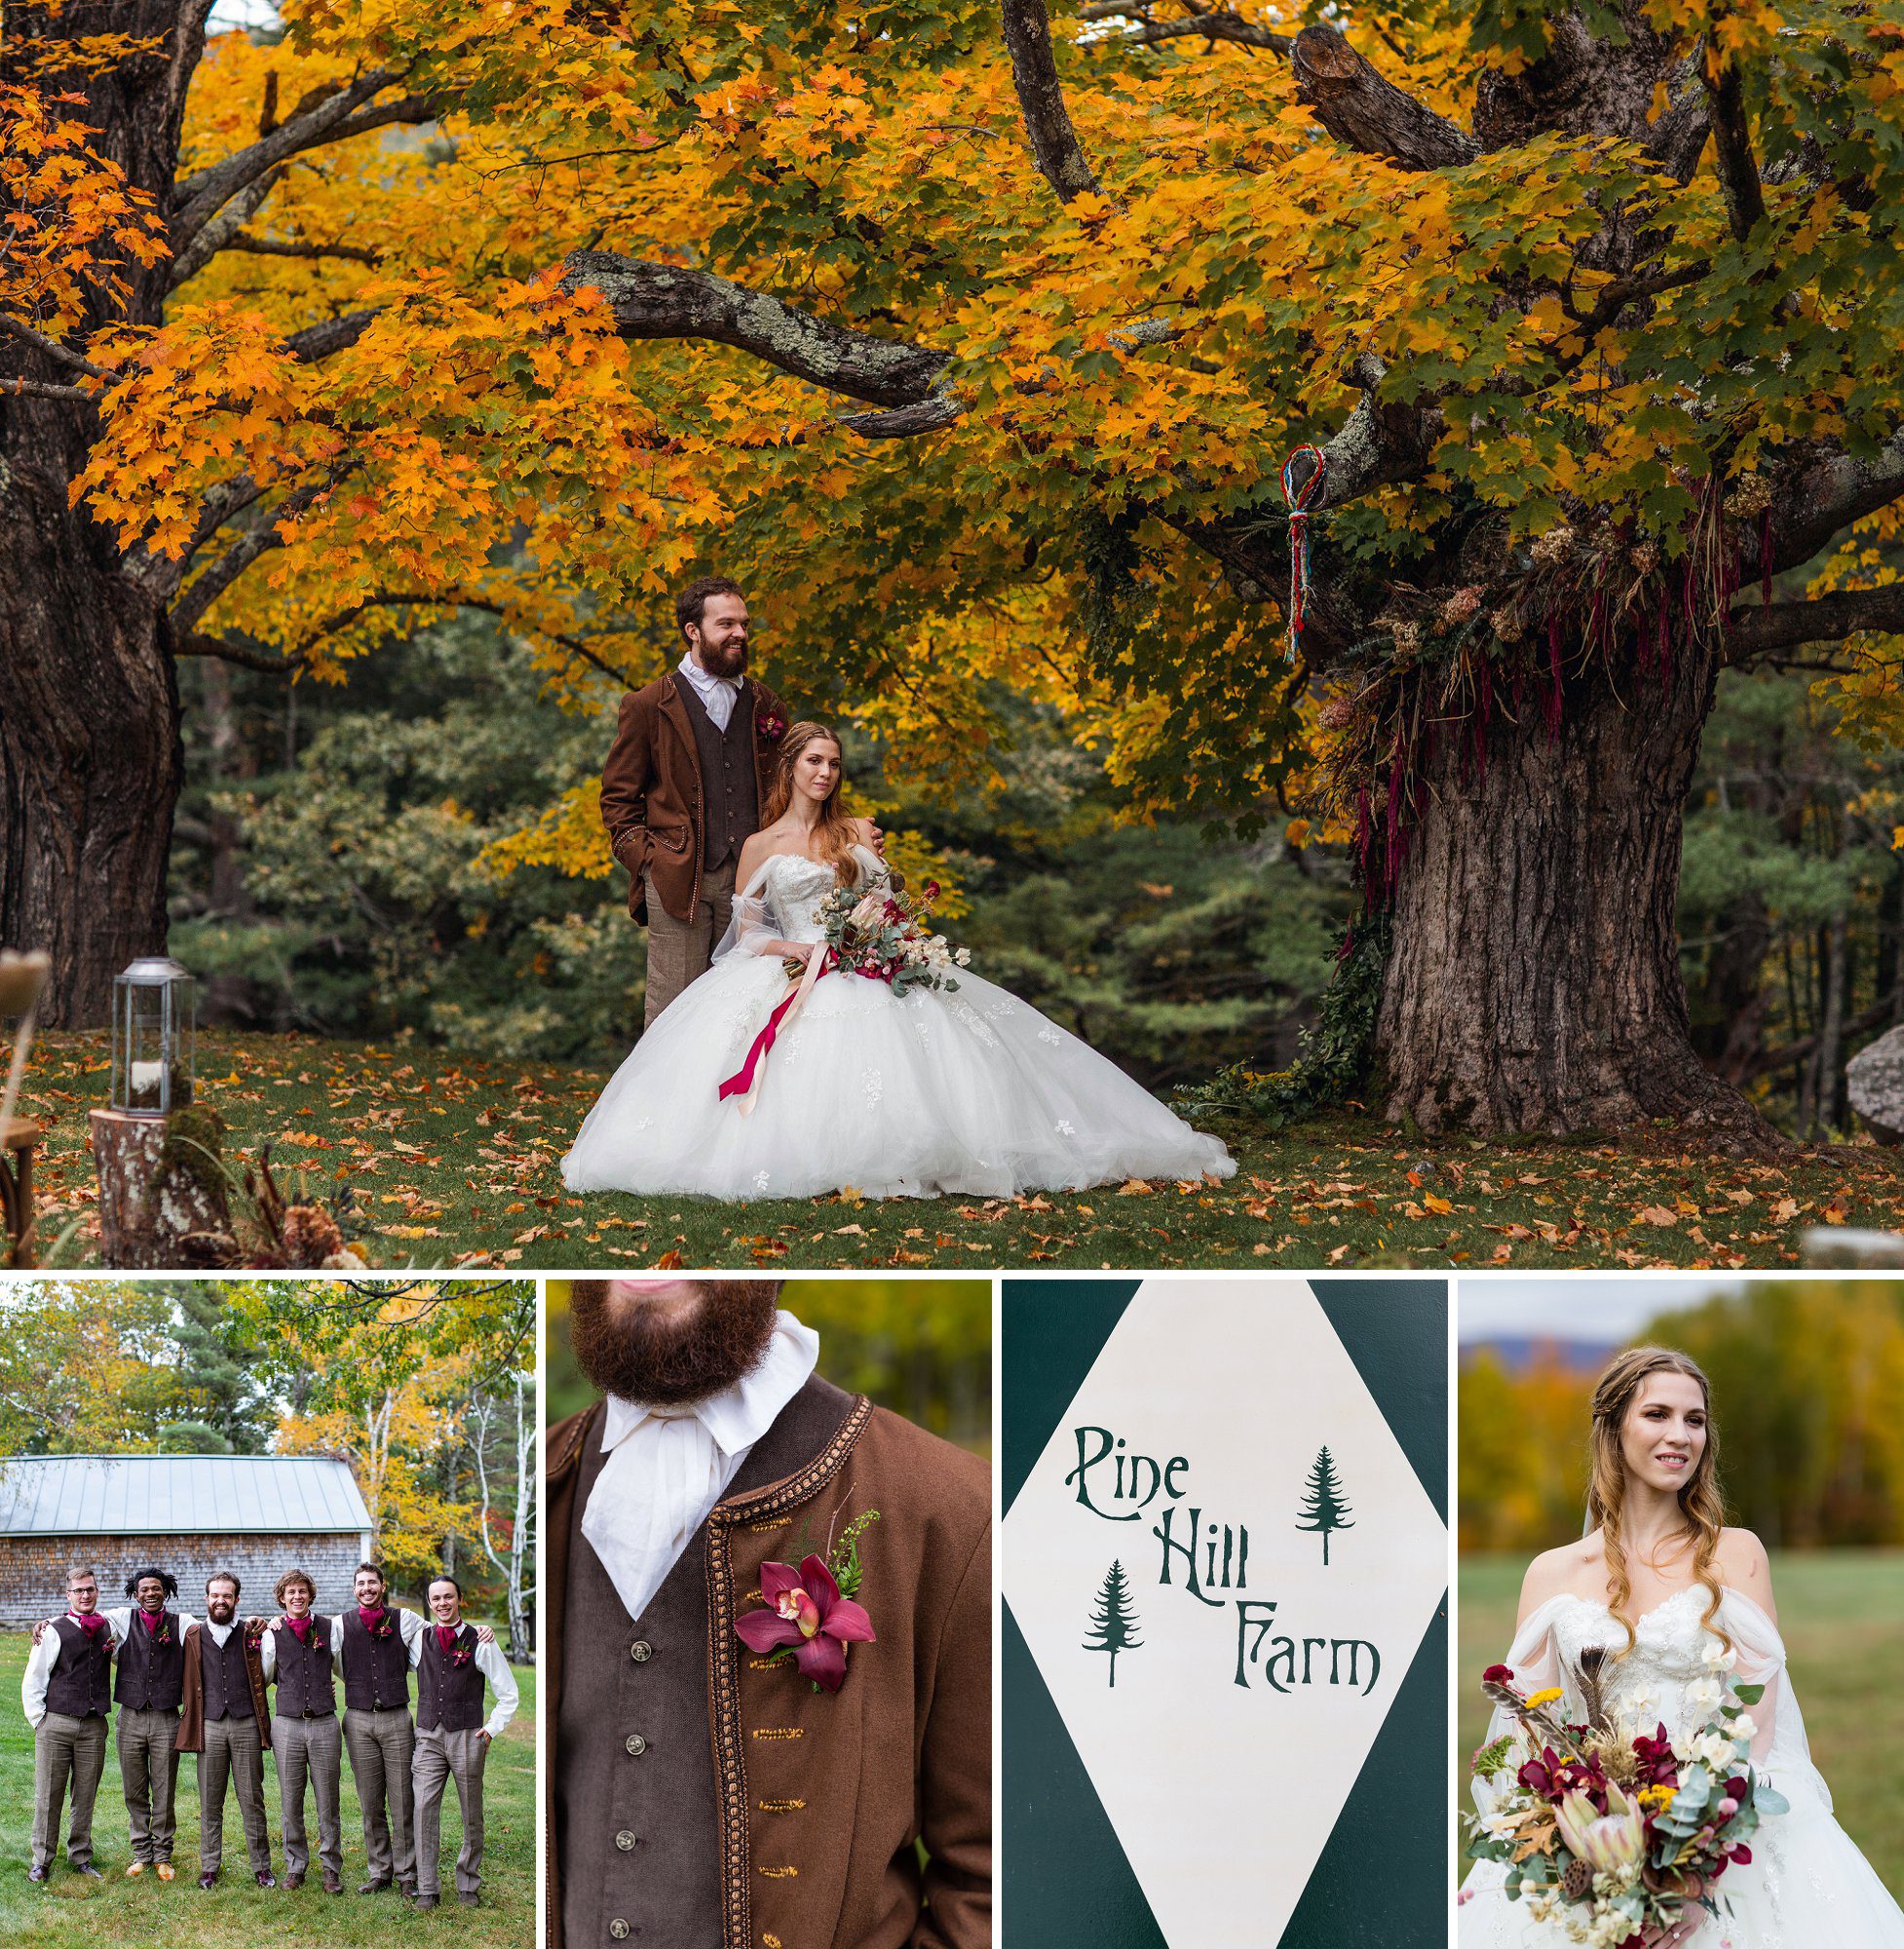 Renaissance Faire inspired autumn wedding at Pine Hill Farm NH